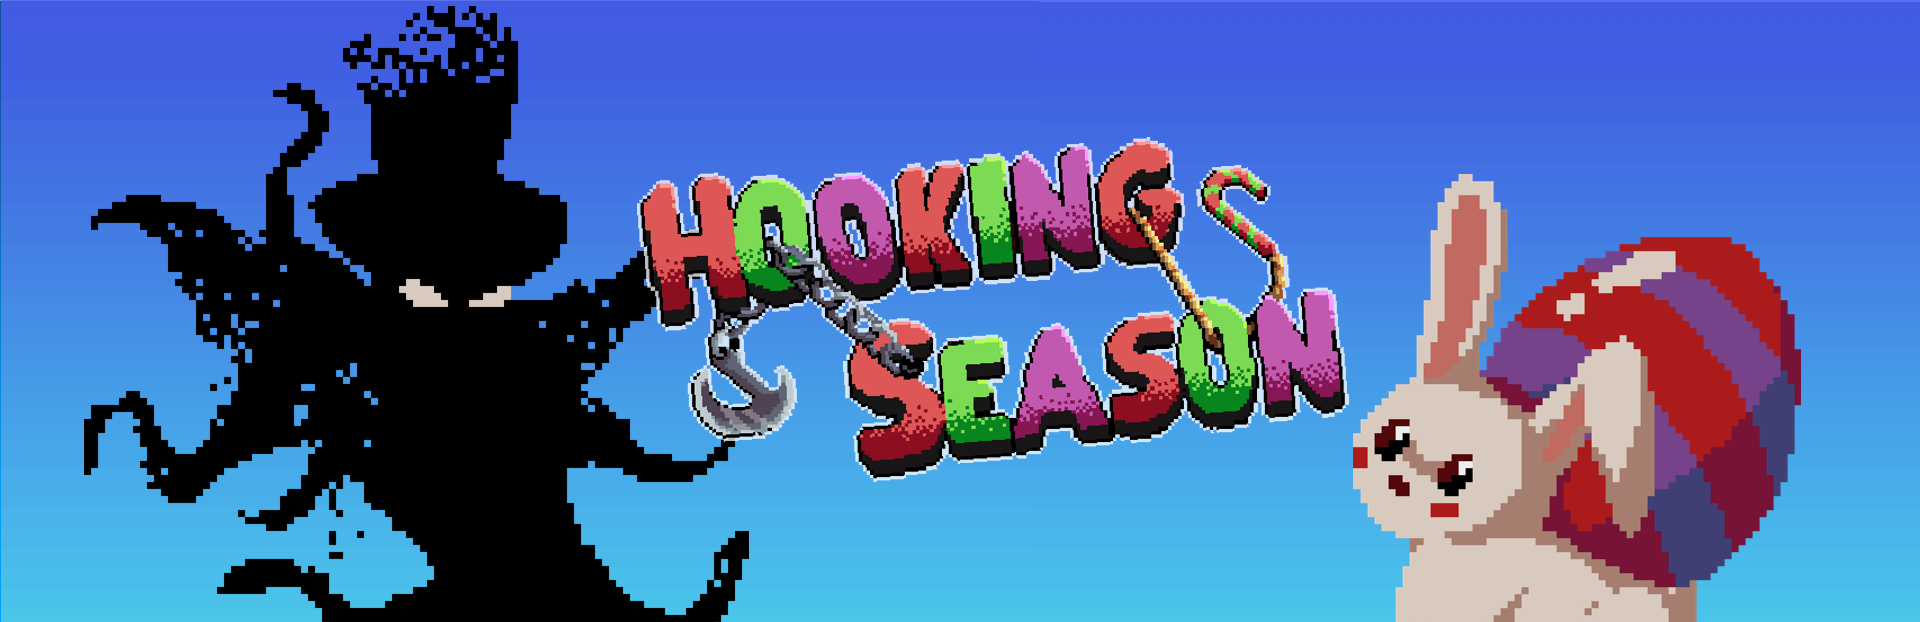 Hooking Season